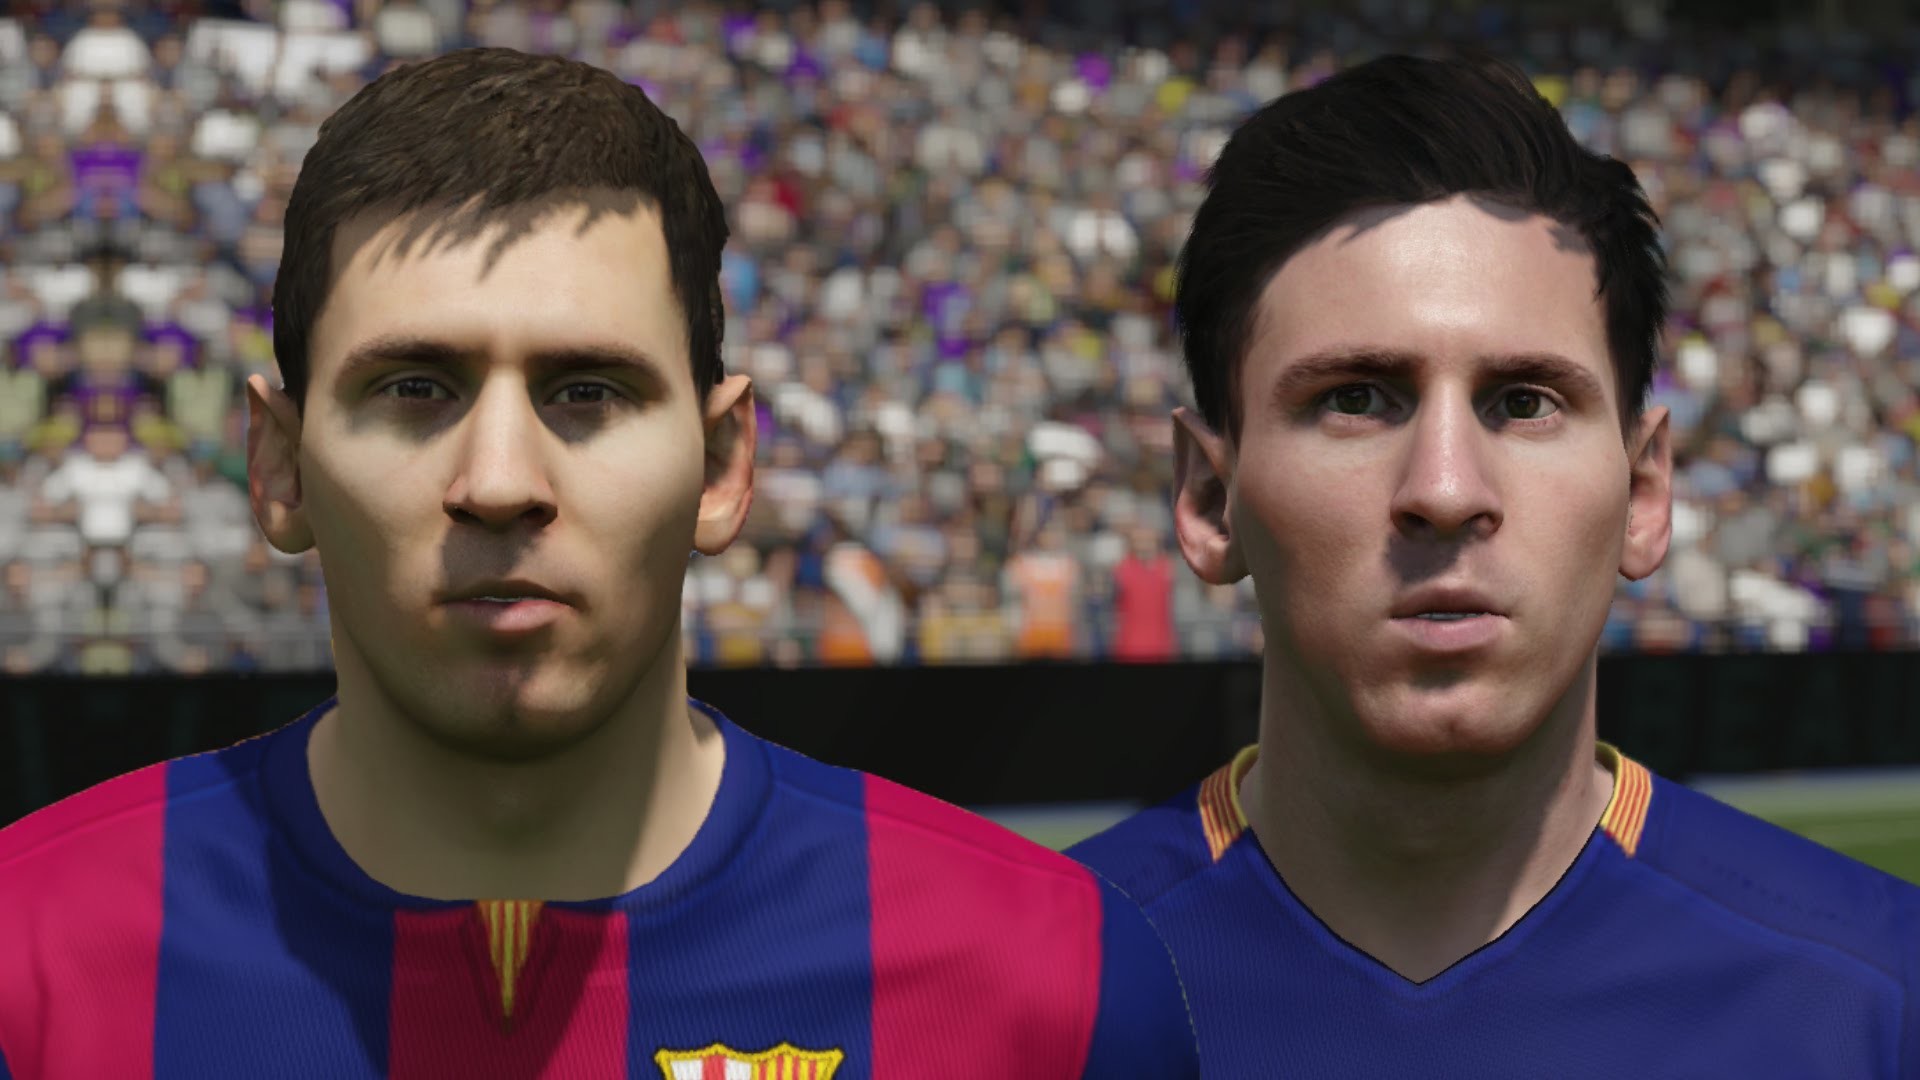 1920x1080 FIFA 16 vs FIFA 15 Faces FC Barcelona (Messi, Suarez, Neymar) - YouTube